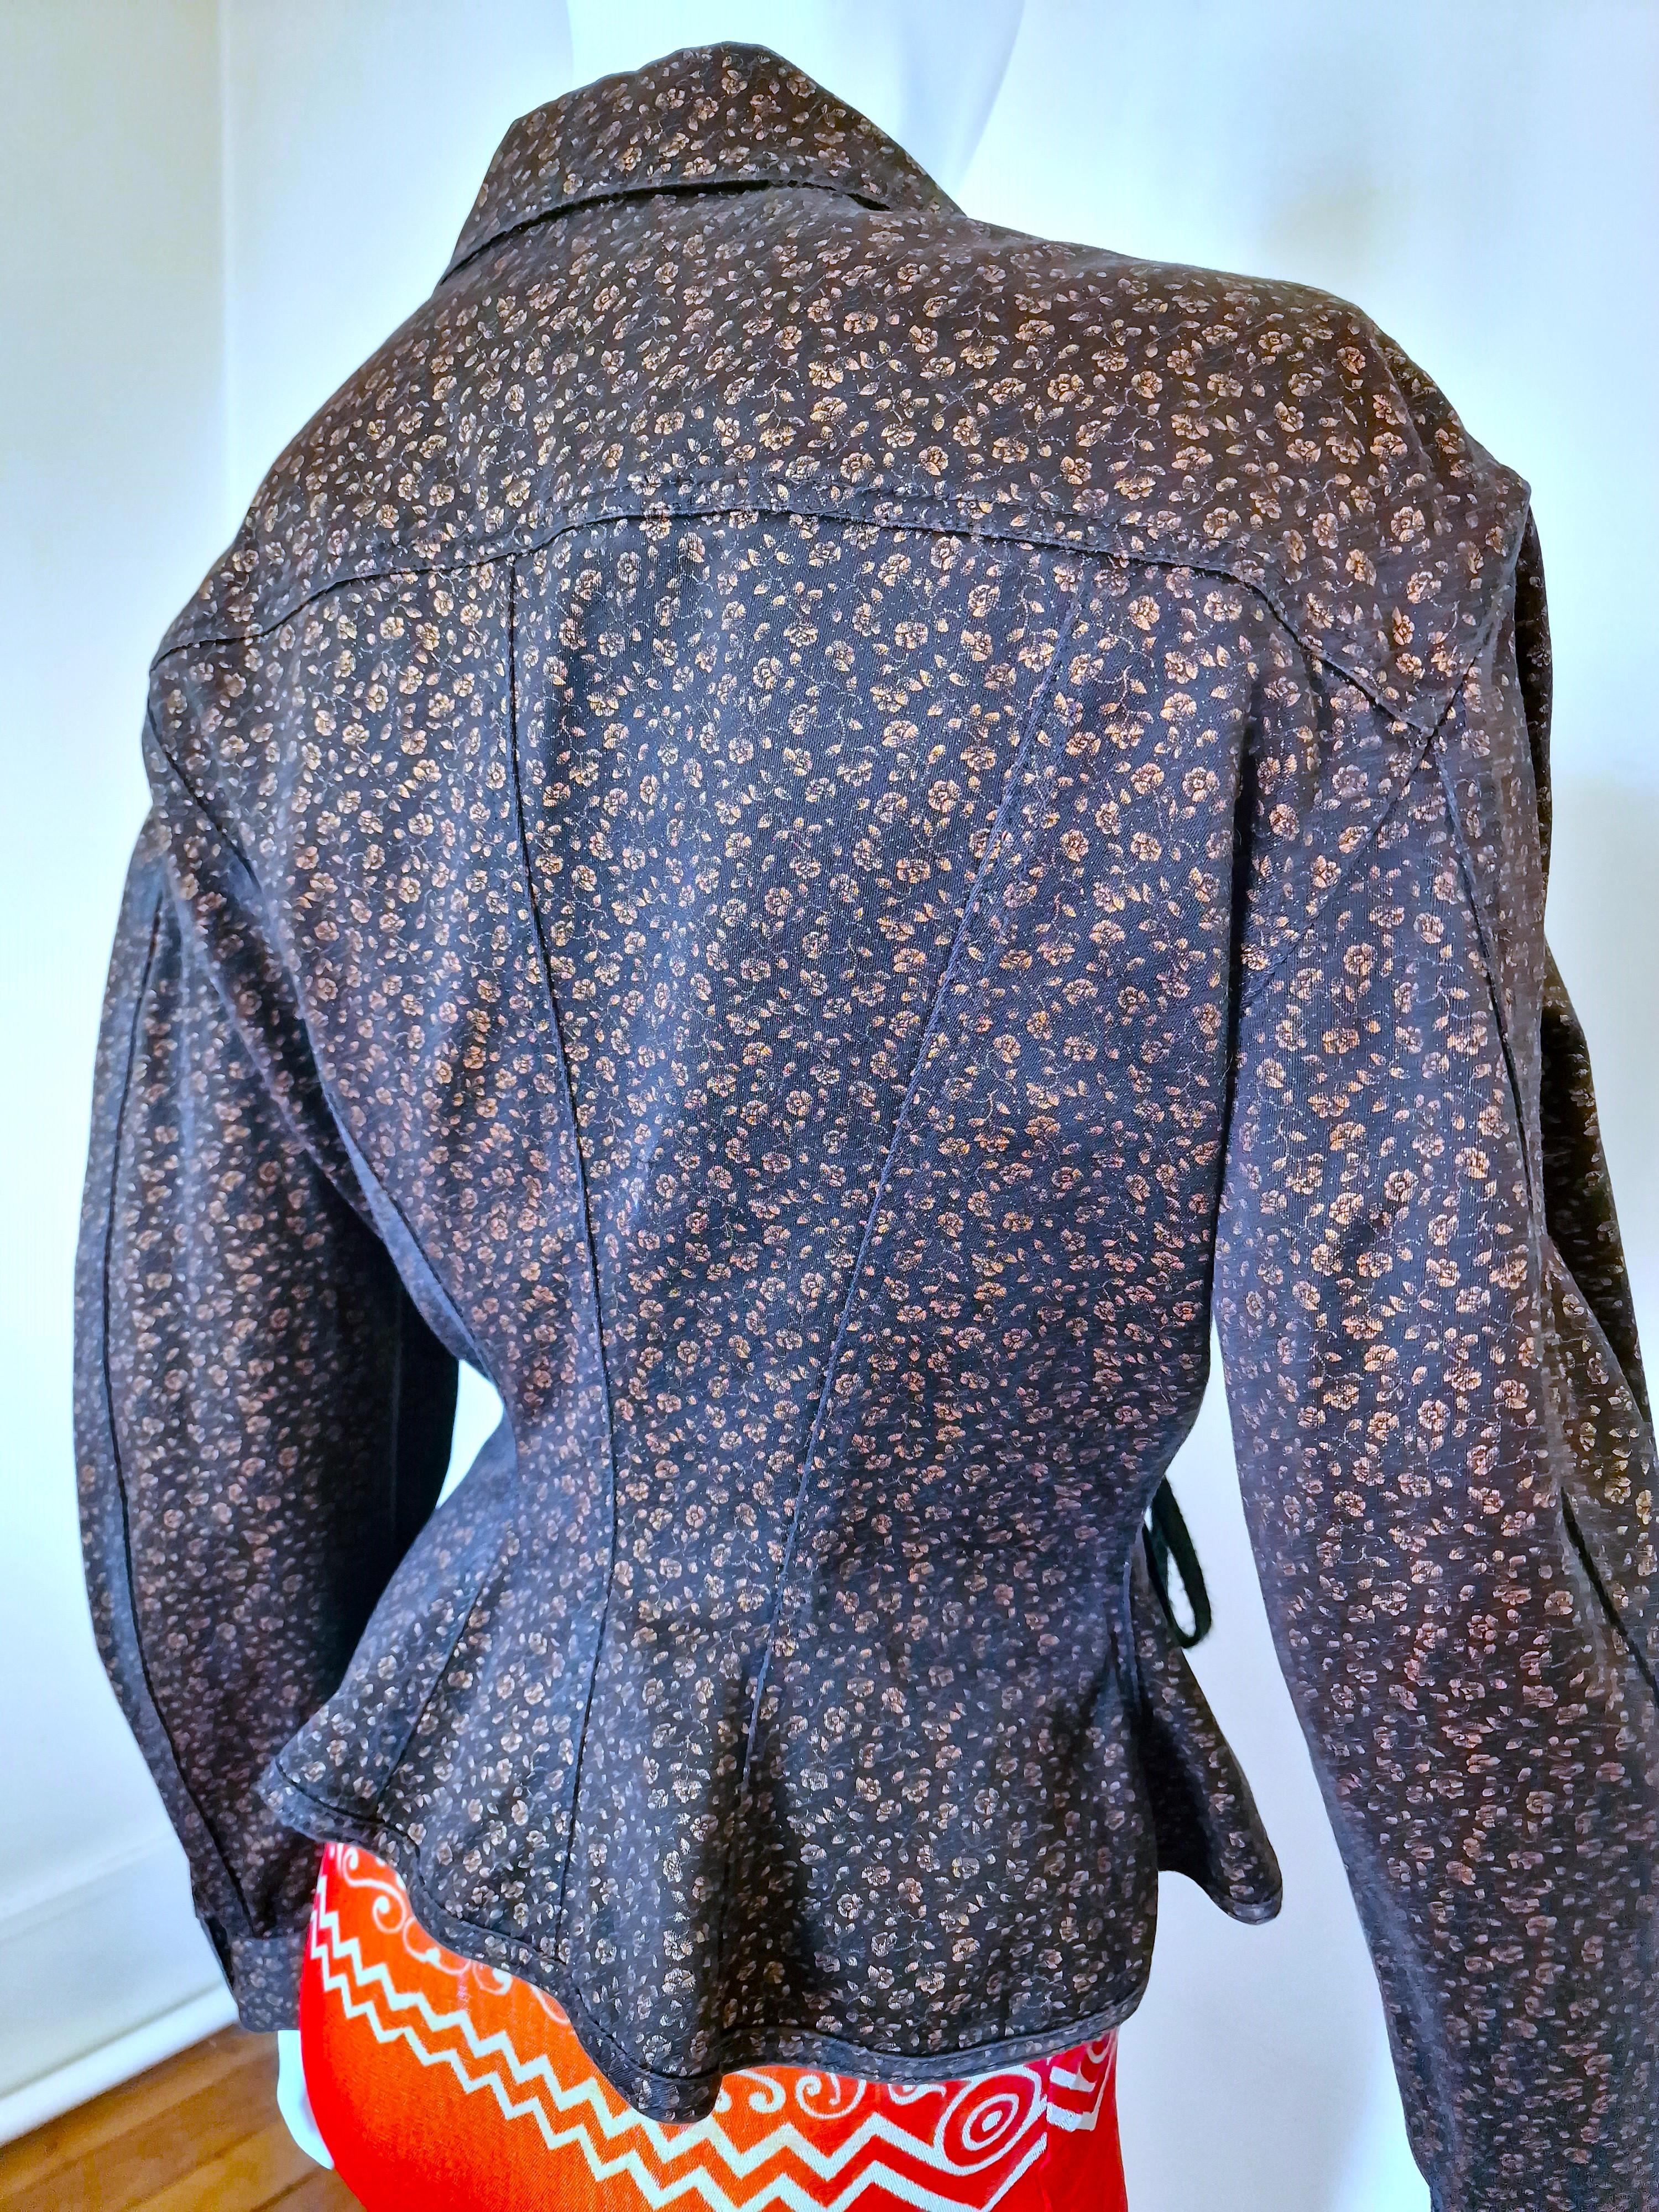 Jean Paul Junior Gaultier SS 1988 Runway Bonded Corset Denim Lace Up Jacket In Excellent Condition For Sale In PARIS, FR